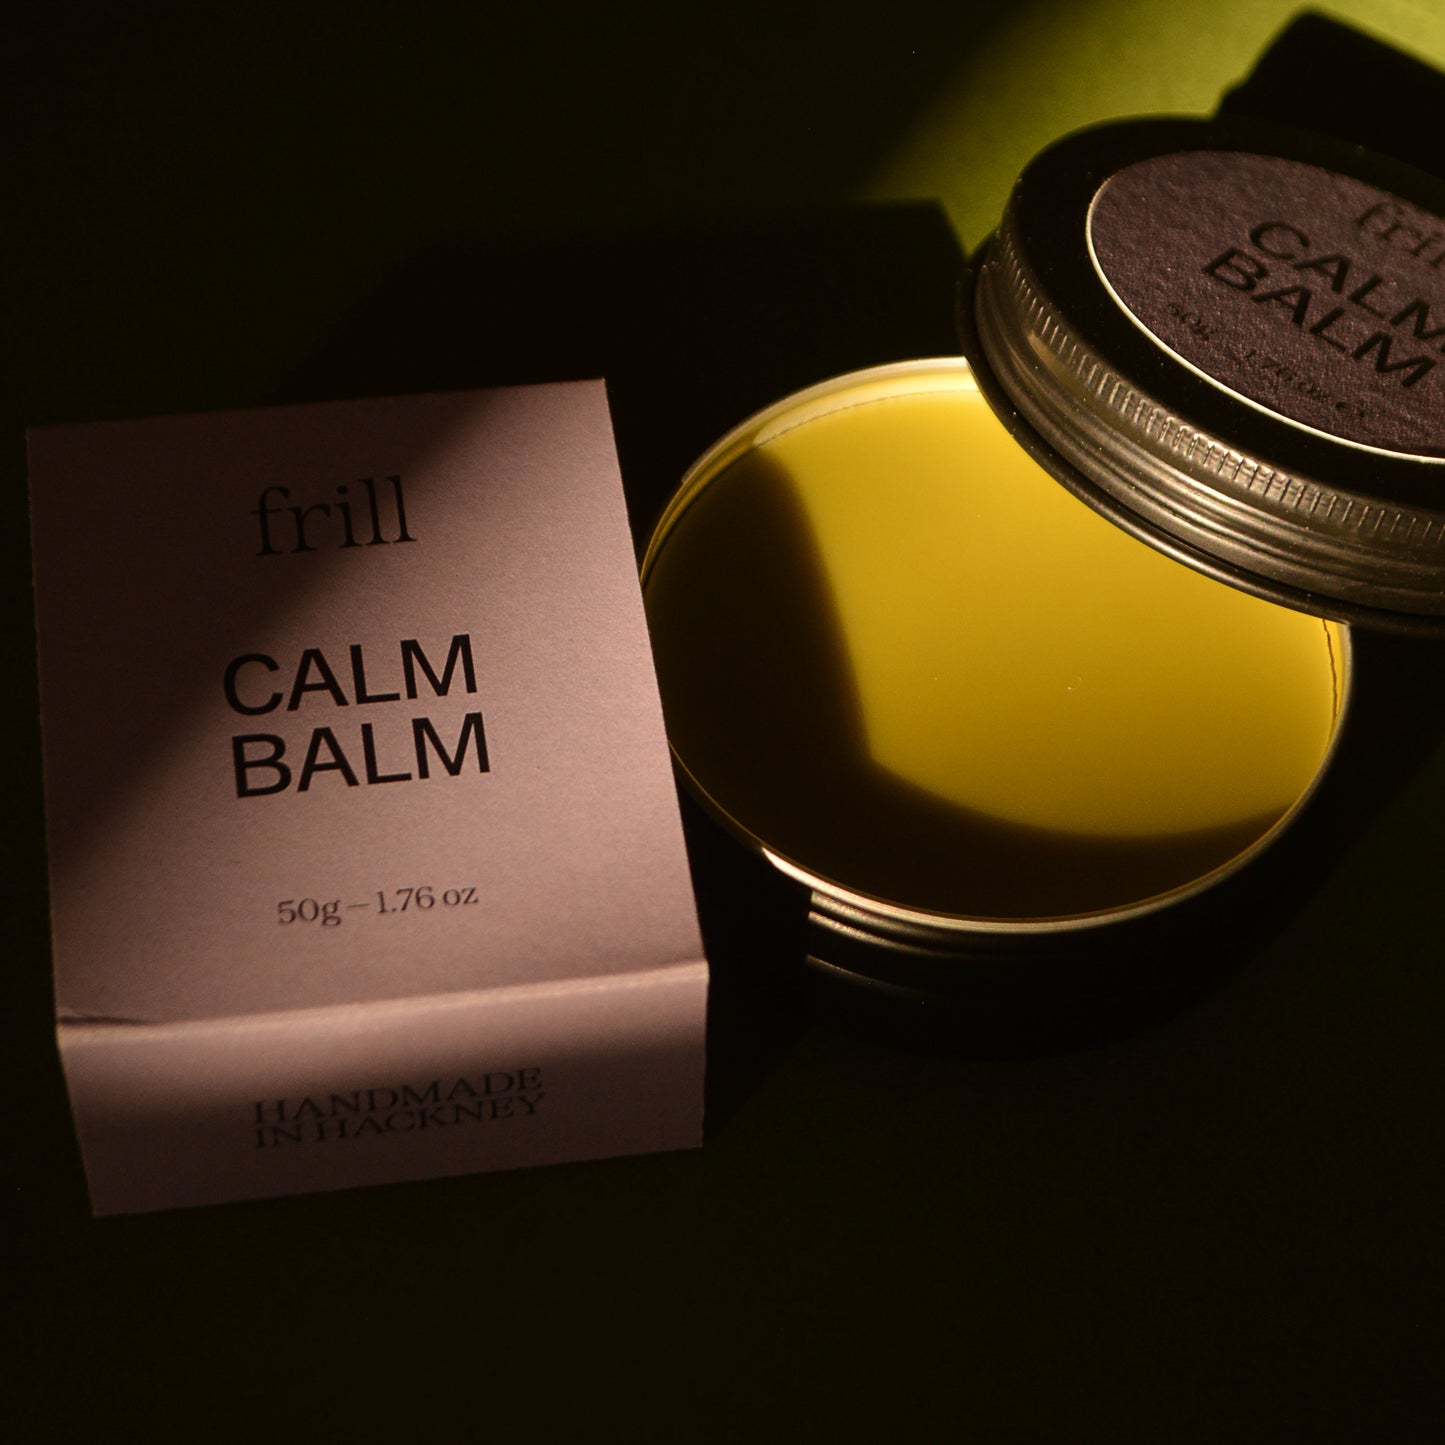 Frill | Calm Balm